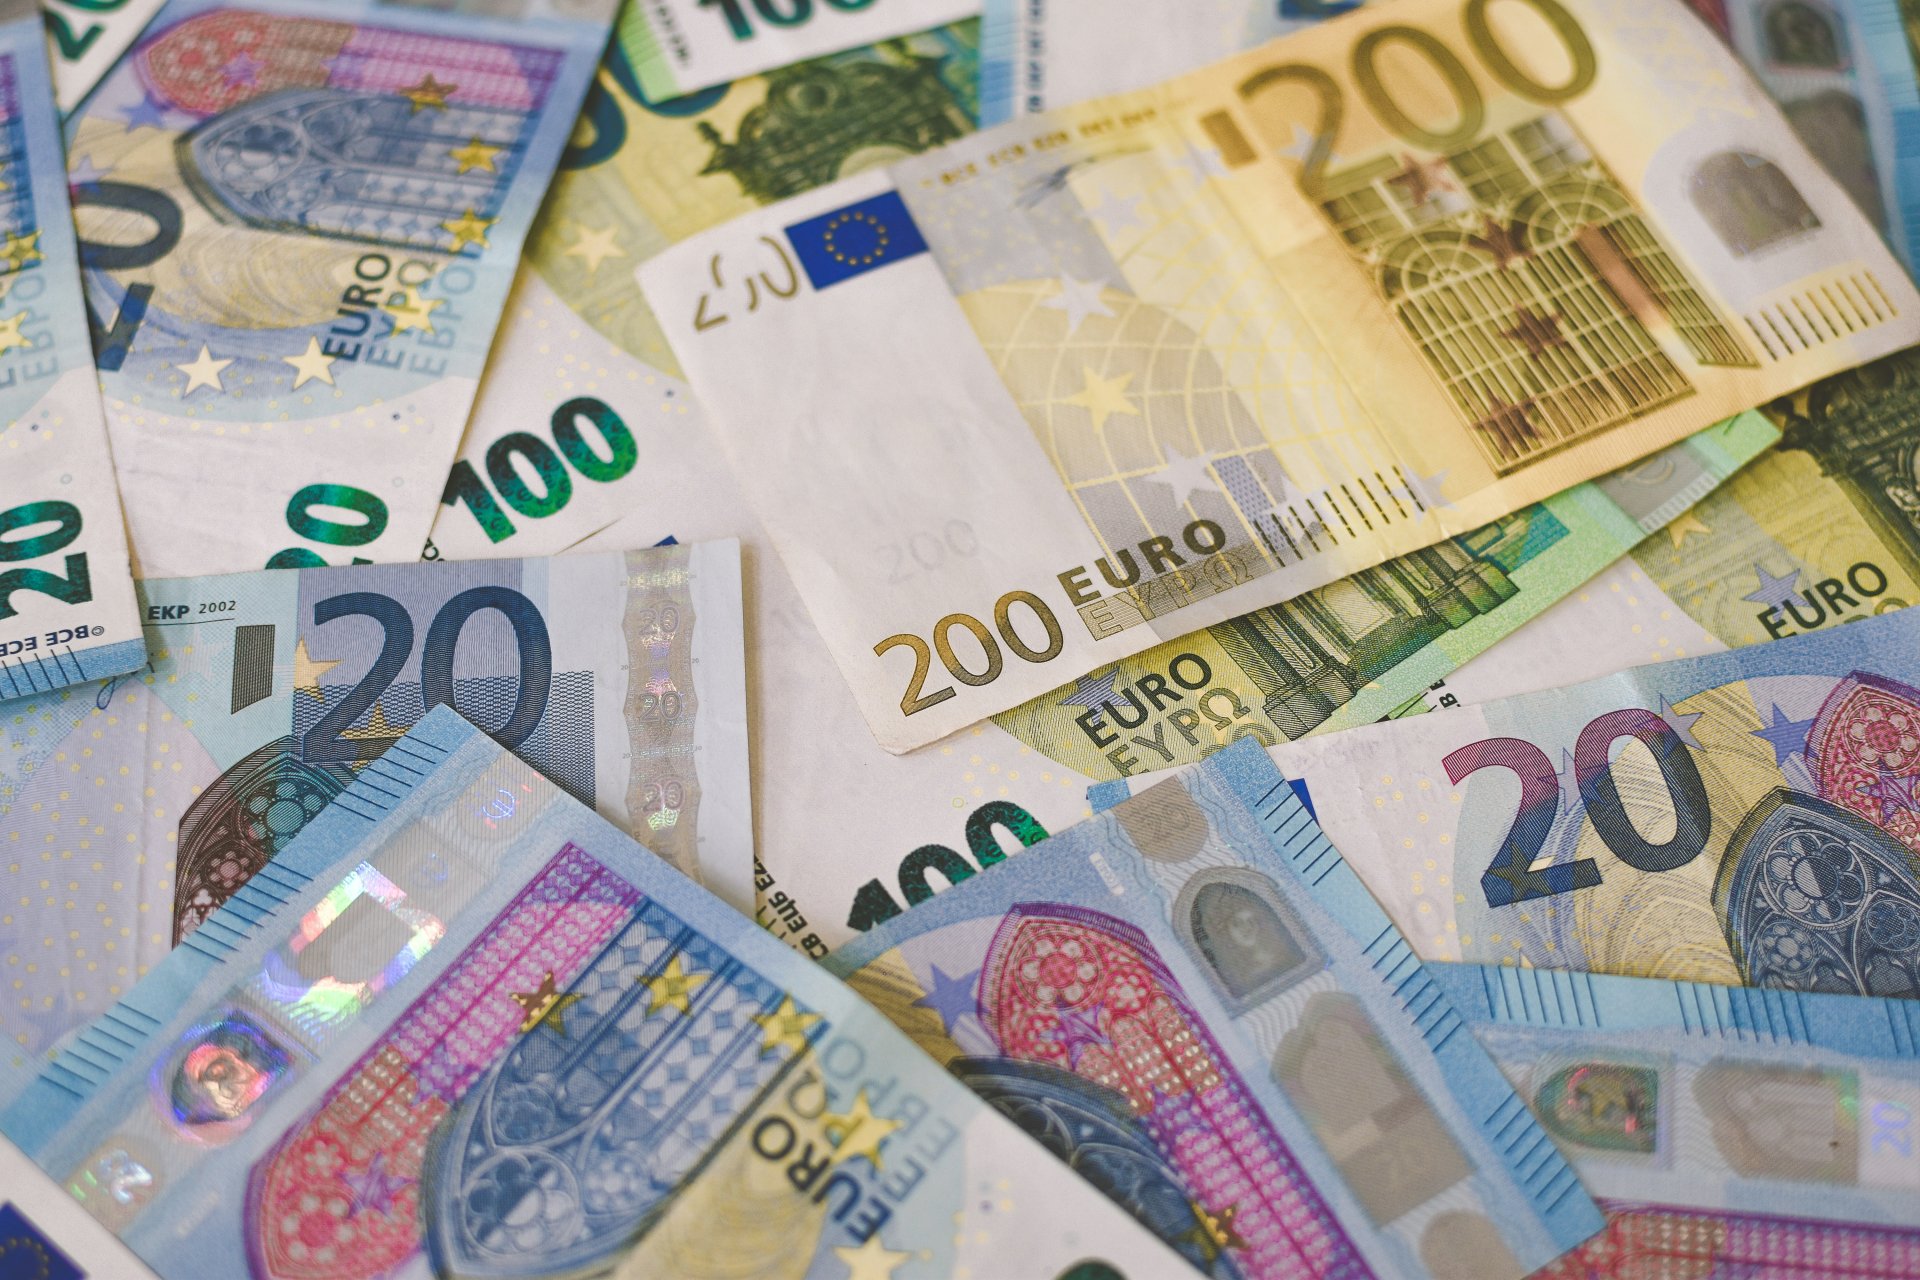 Slovenia's bond issue raised by EUR 500m